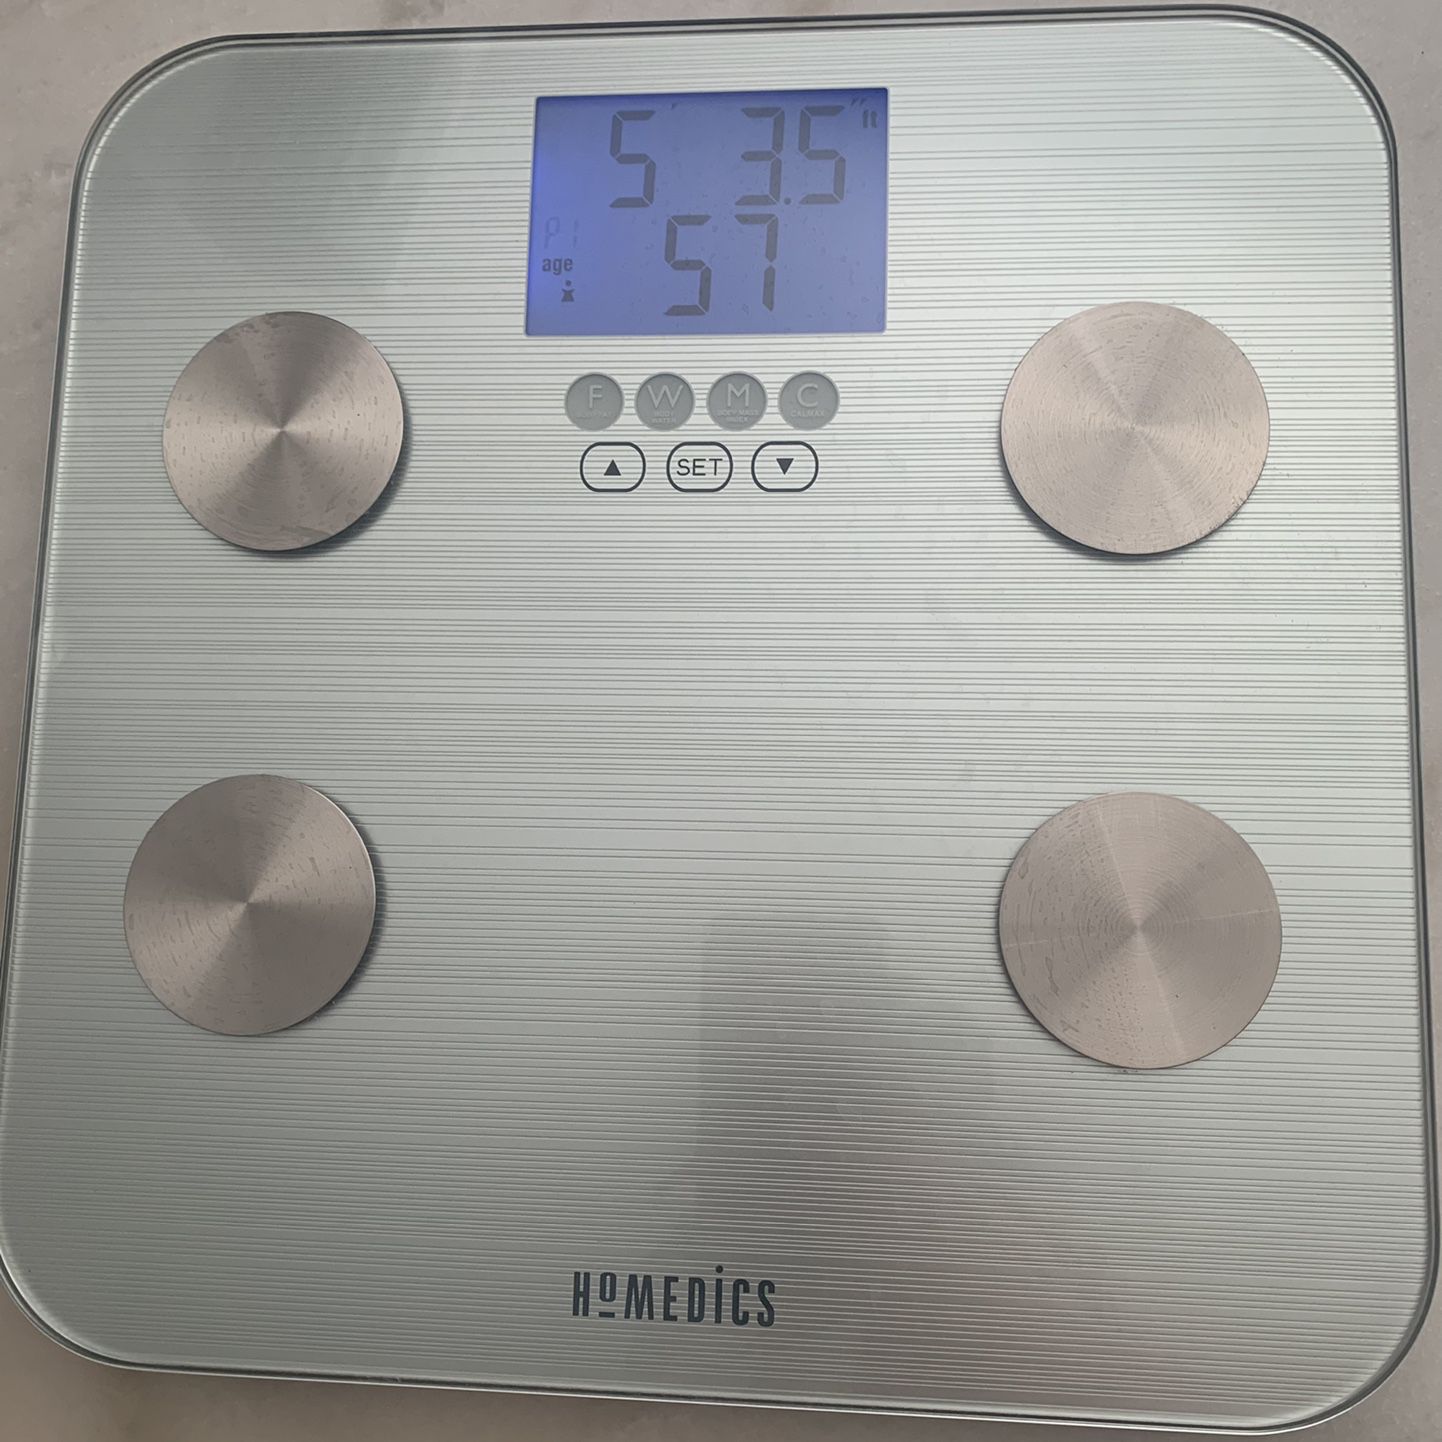 HoMedics HealthStation Body Fat Bathroom Scale for Sale in Las Vegas, NV -  OfferUp